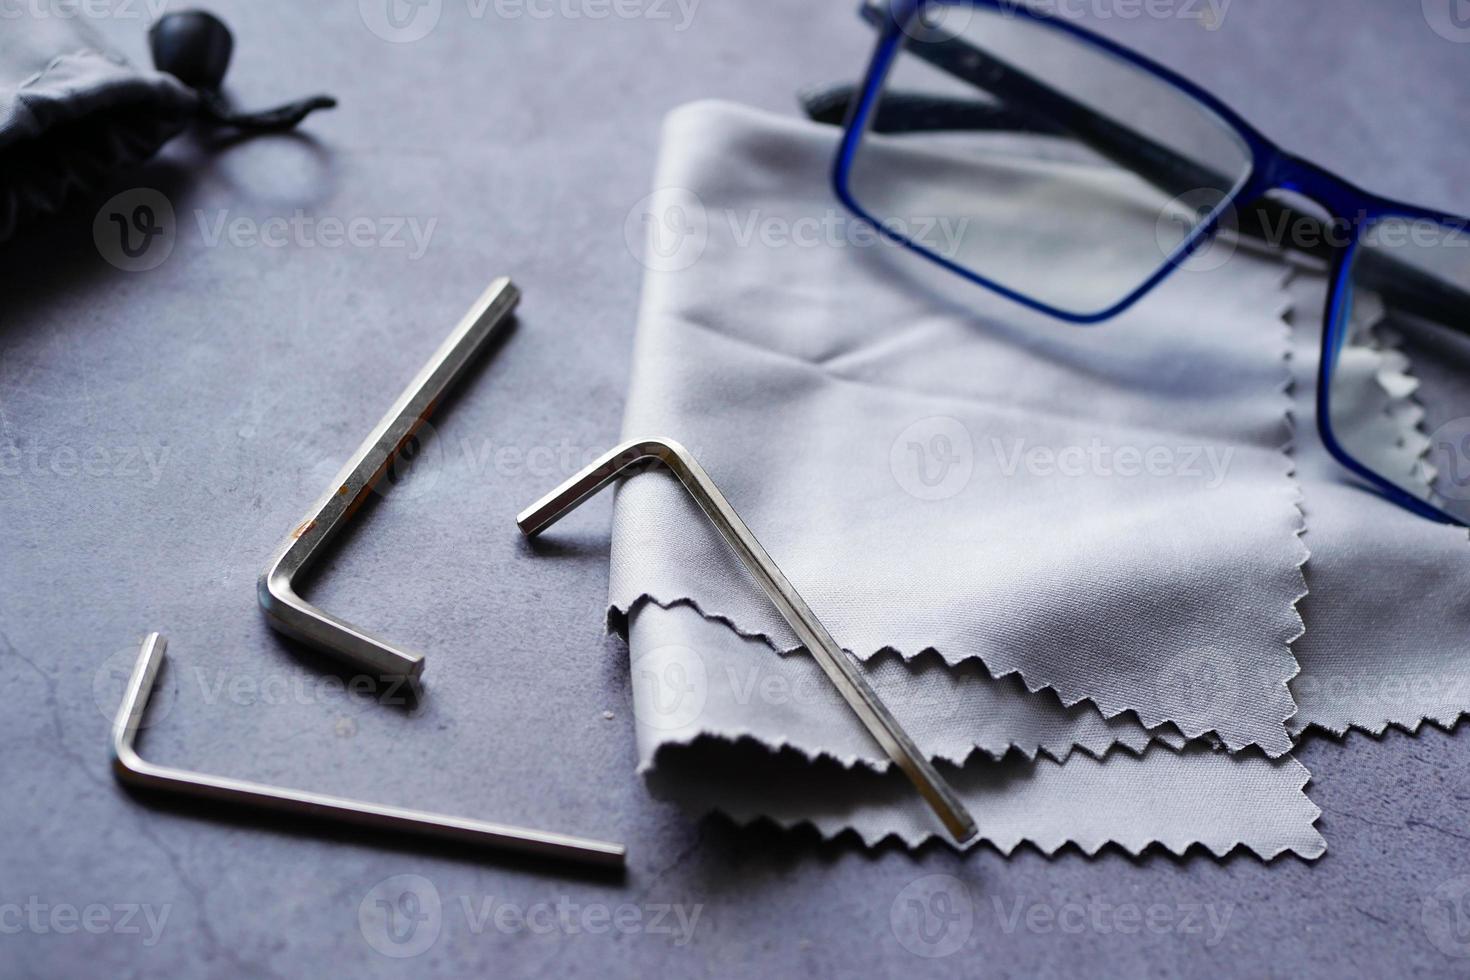 eyewear repair equipment with an eyeglass frame, photo